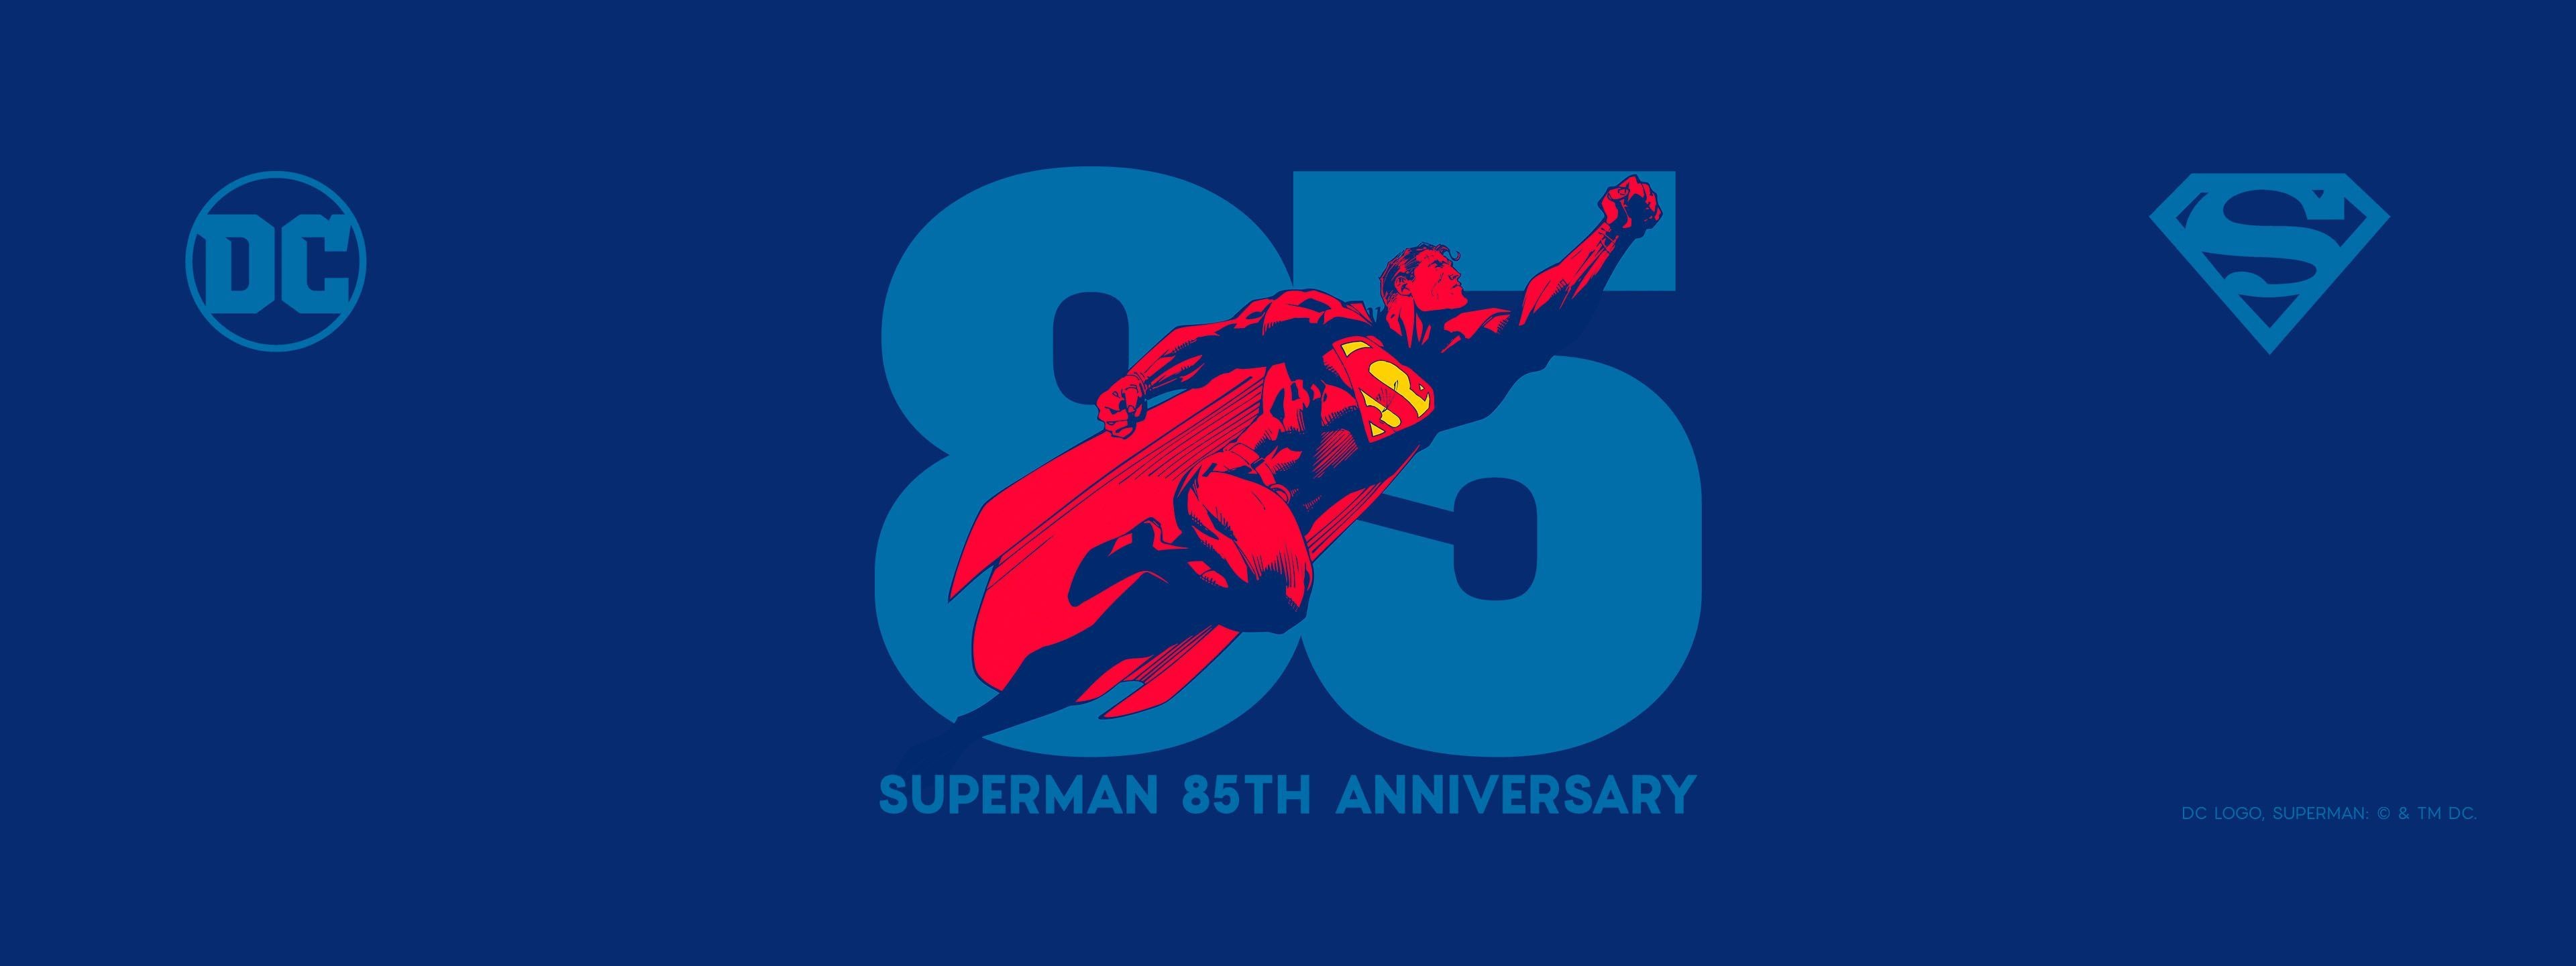 Superman 85th Anniversary